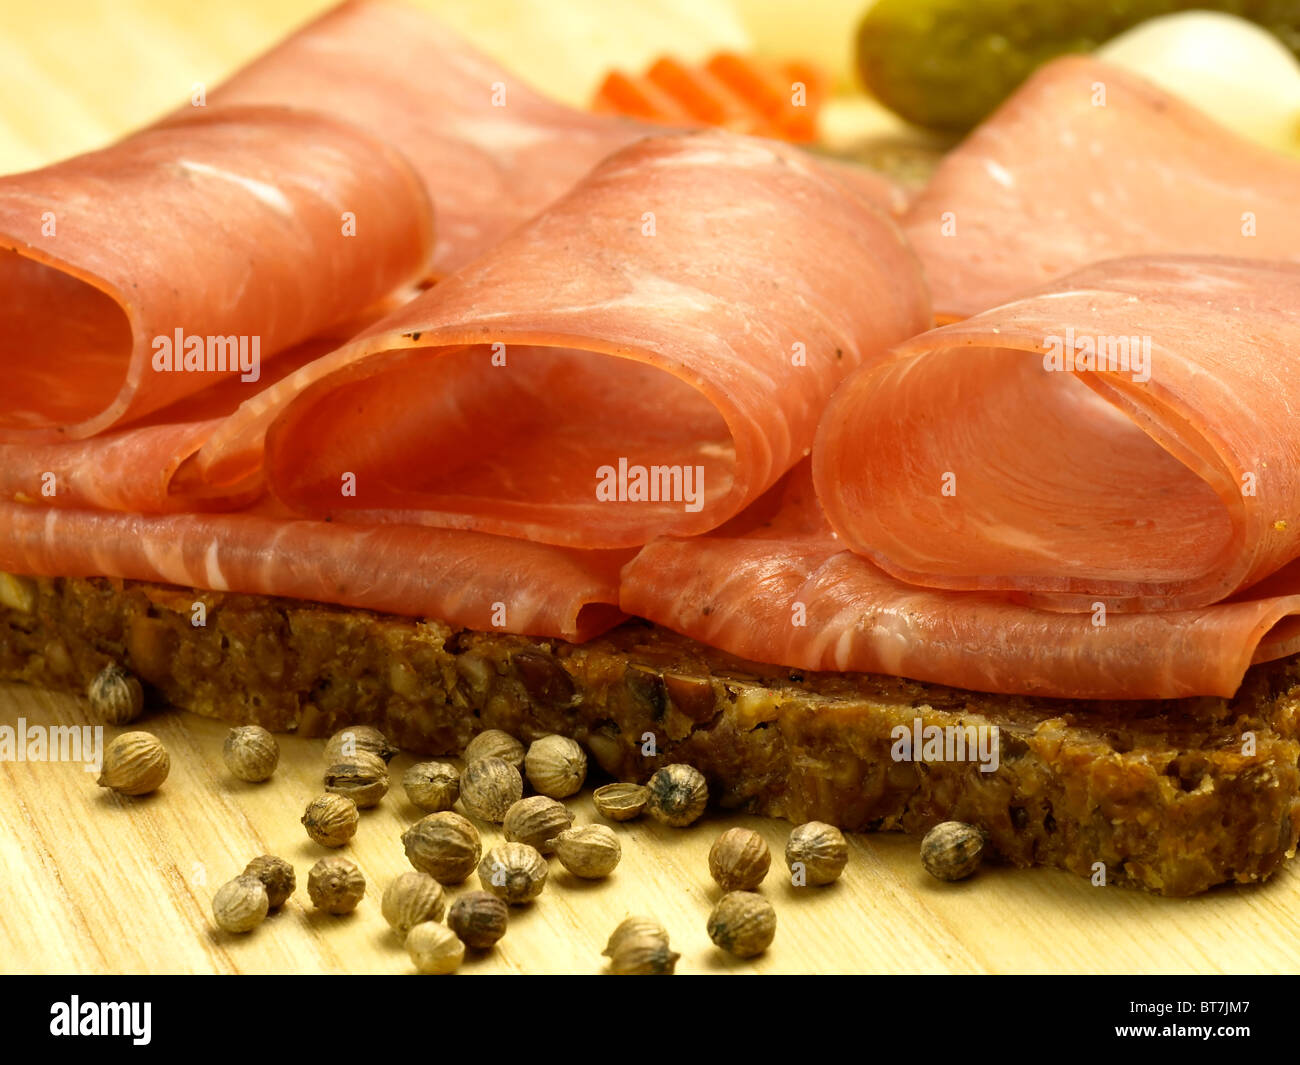 whole grain bread with ham and spice Stock Photo